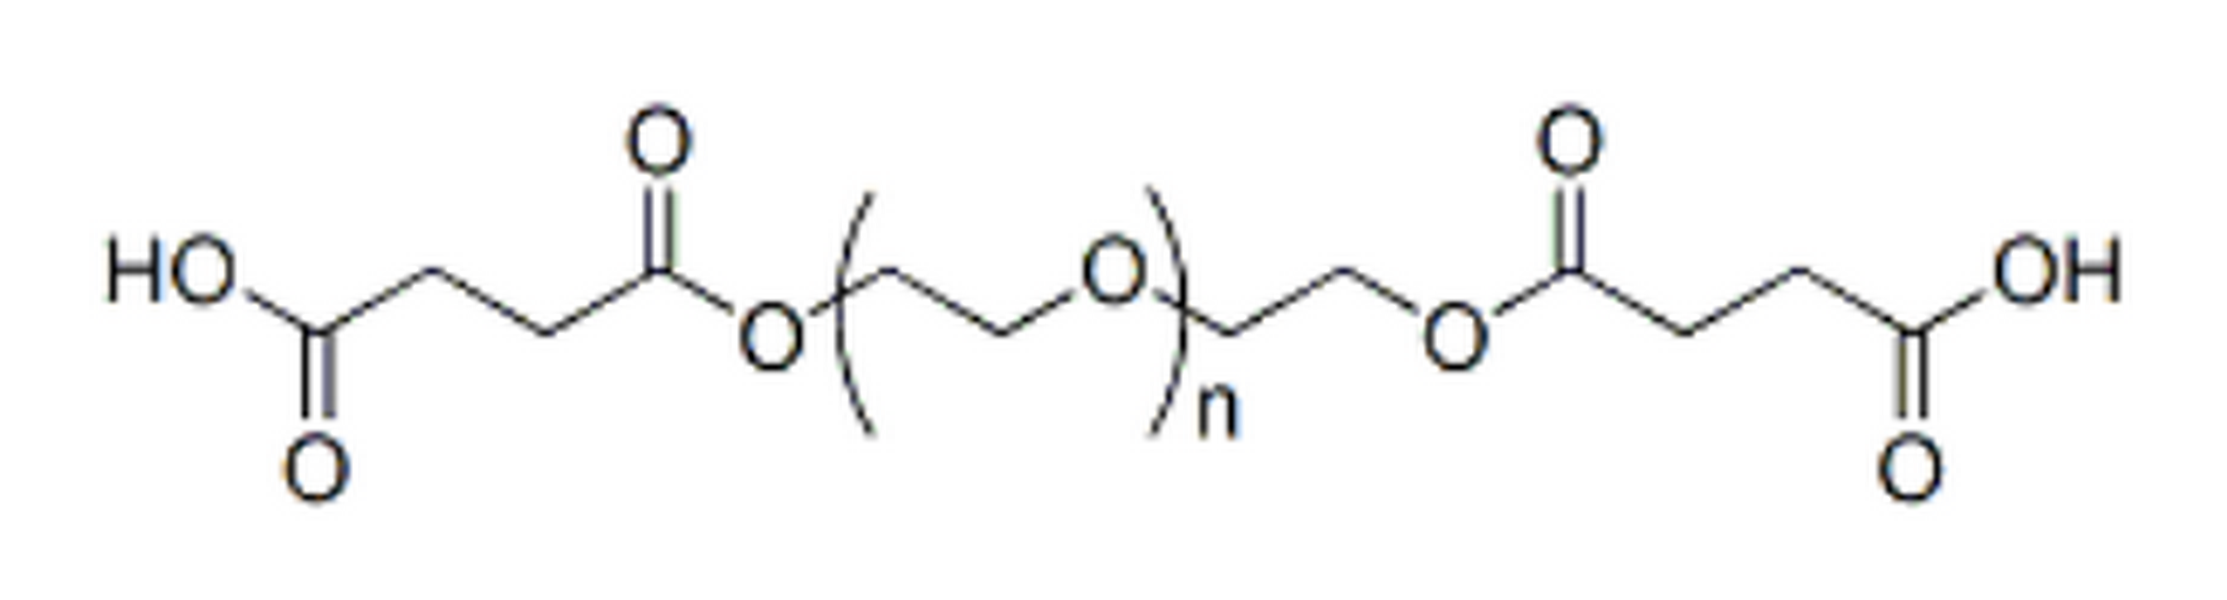 PEG-bis-Succinic Acid, MW 1K